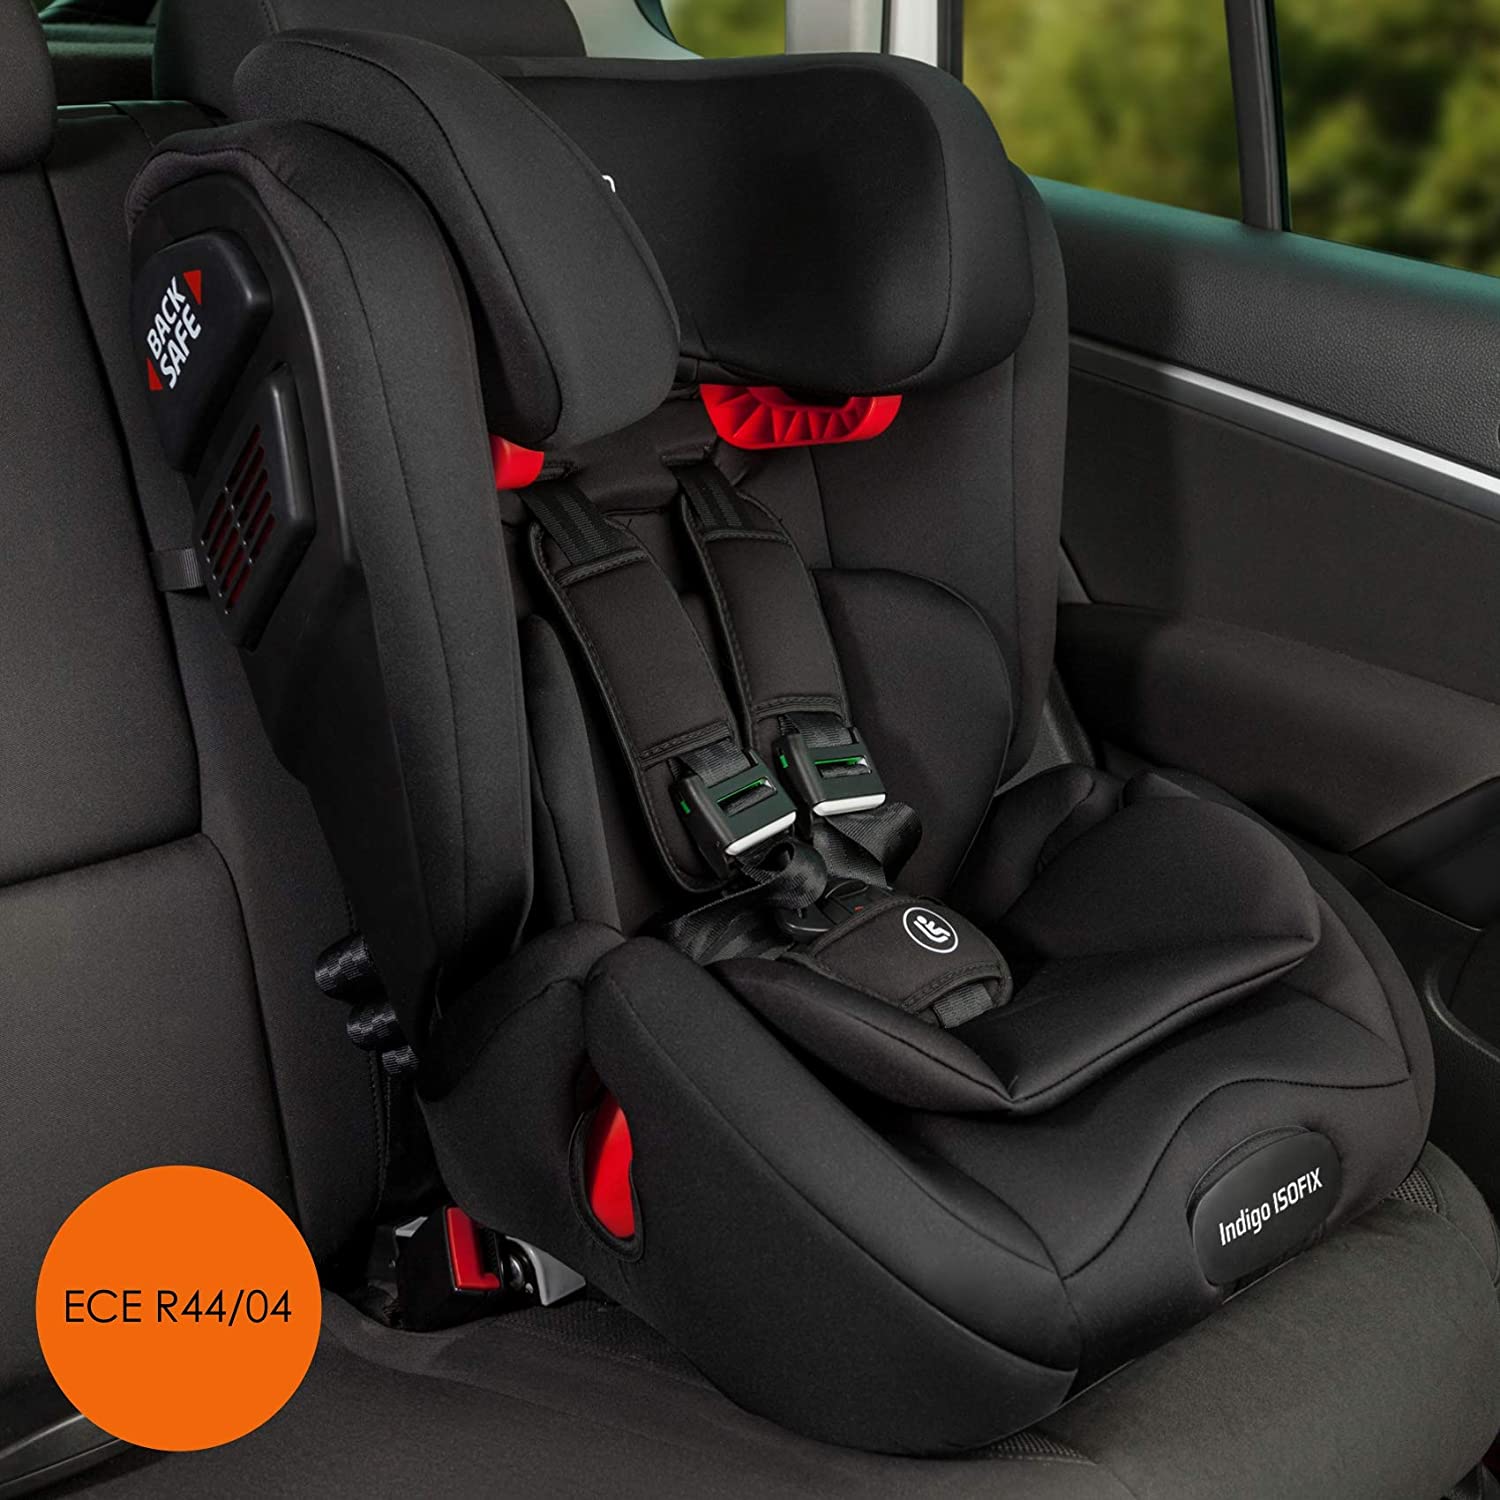 BABYLON Indigo Isofix Baby Car Seat Group 1/2/3 Child Seat 9-36 kg (1 to 12 Years) ECE R44/04 White / Black